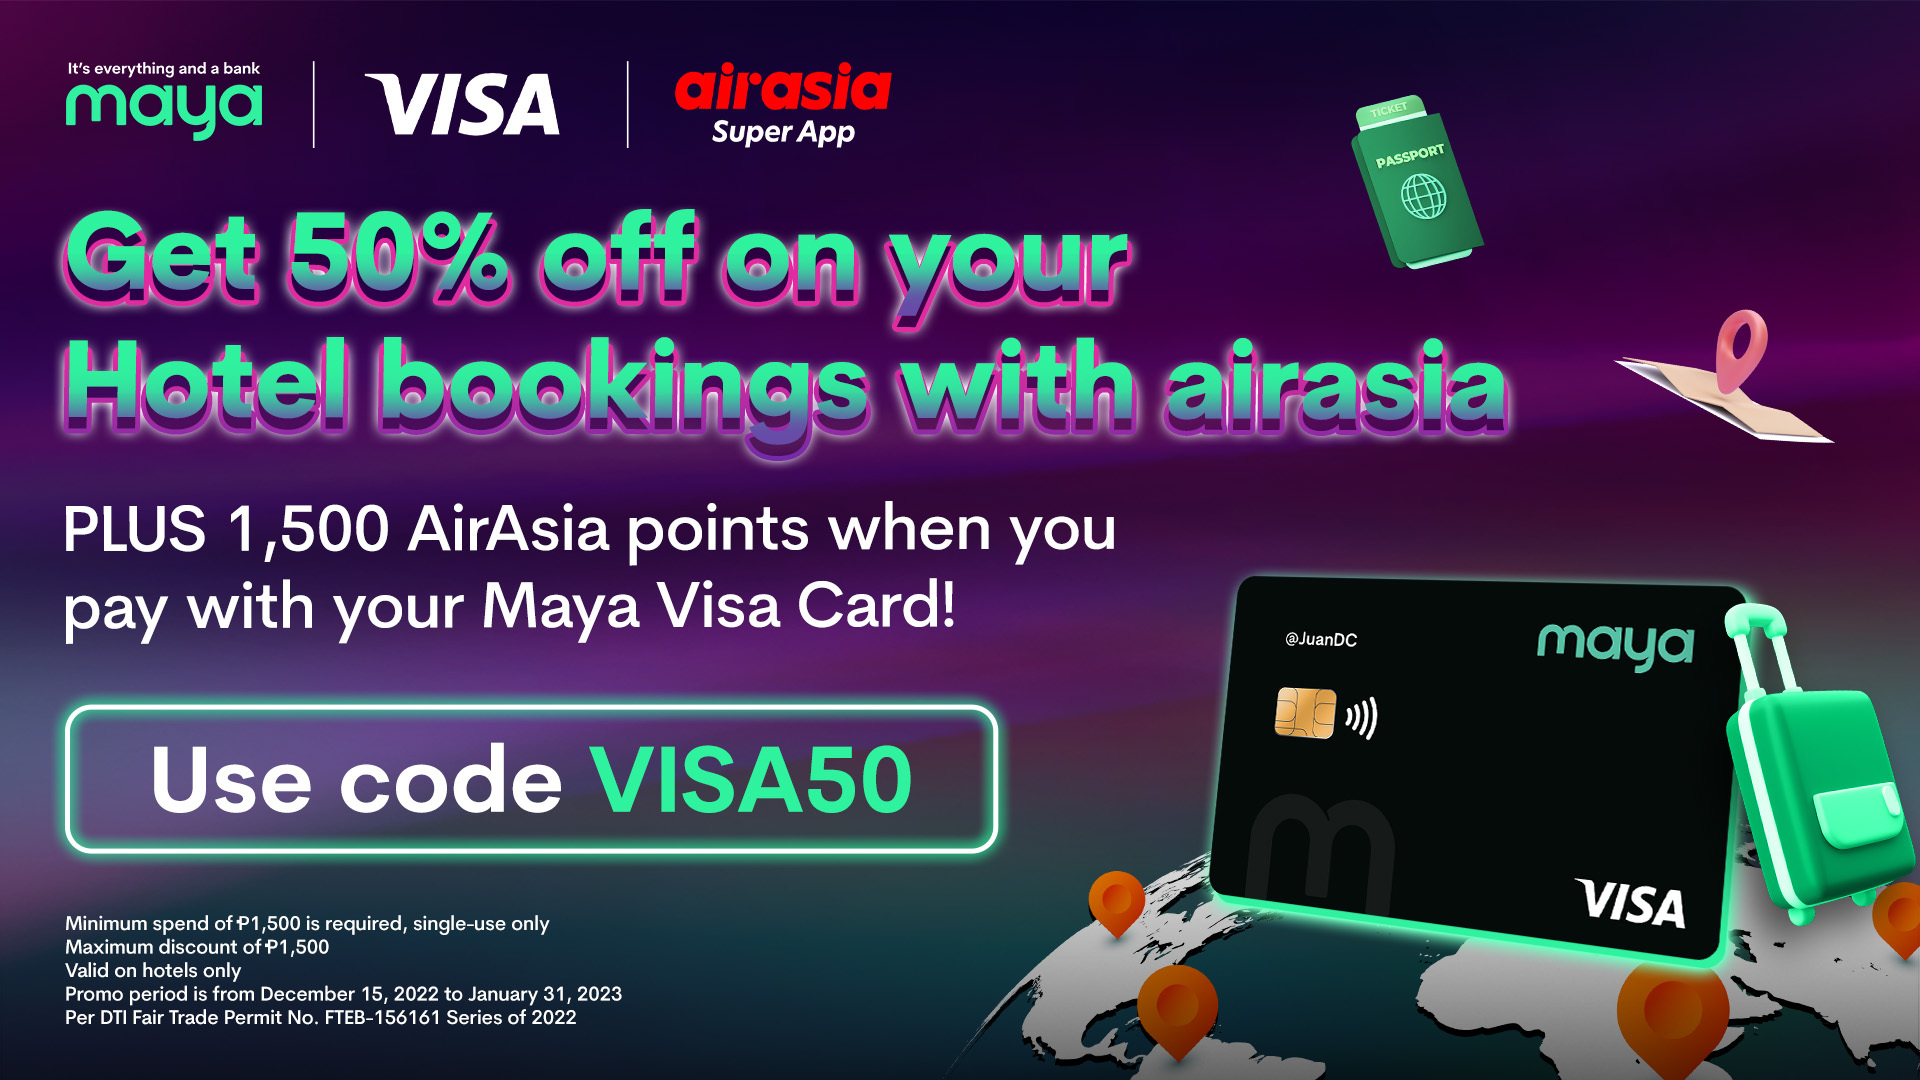 011223 - Maya - EN - visa airasia deals page copy